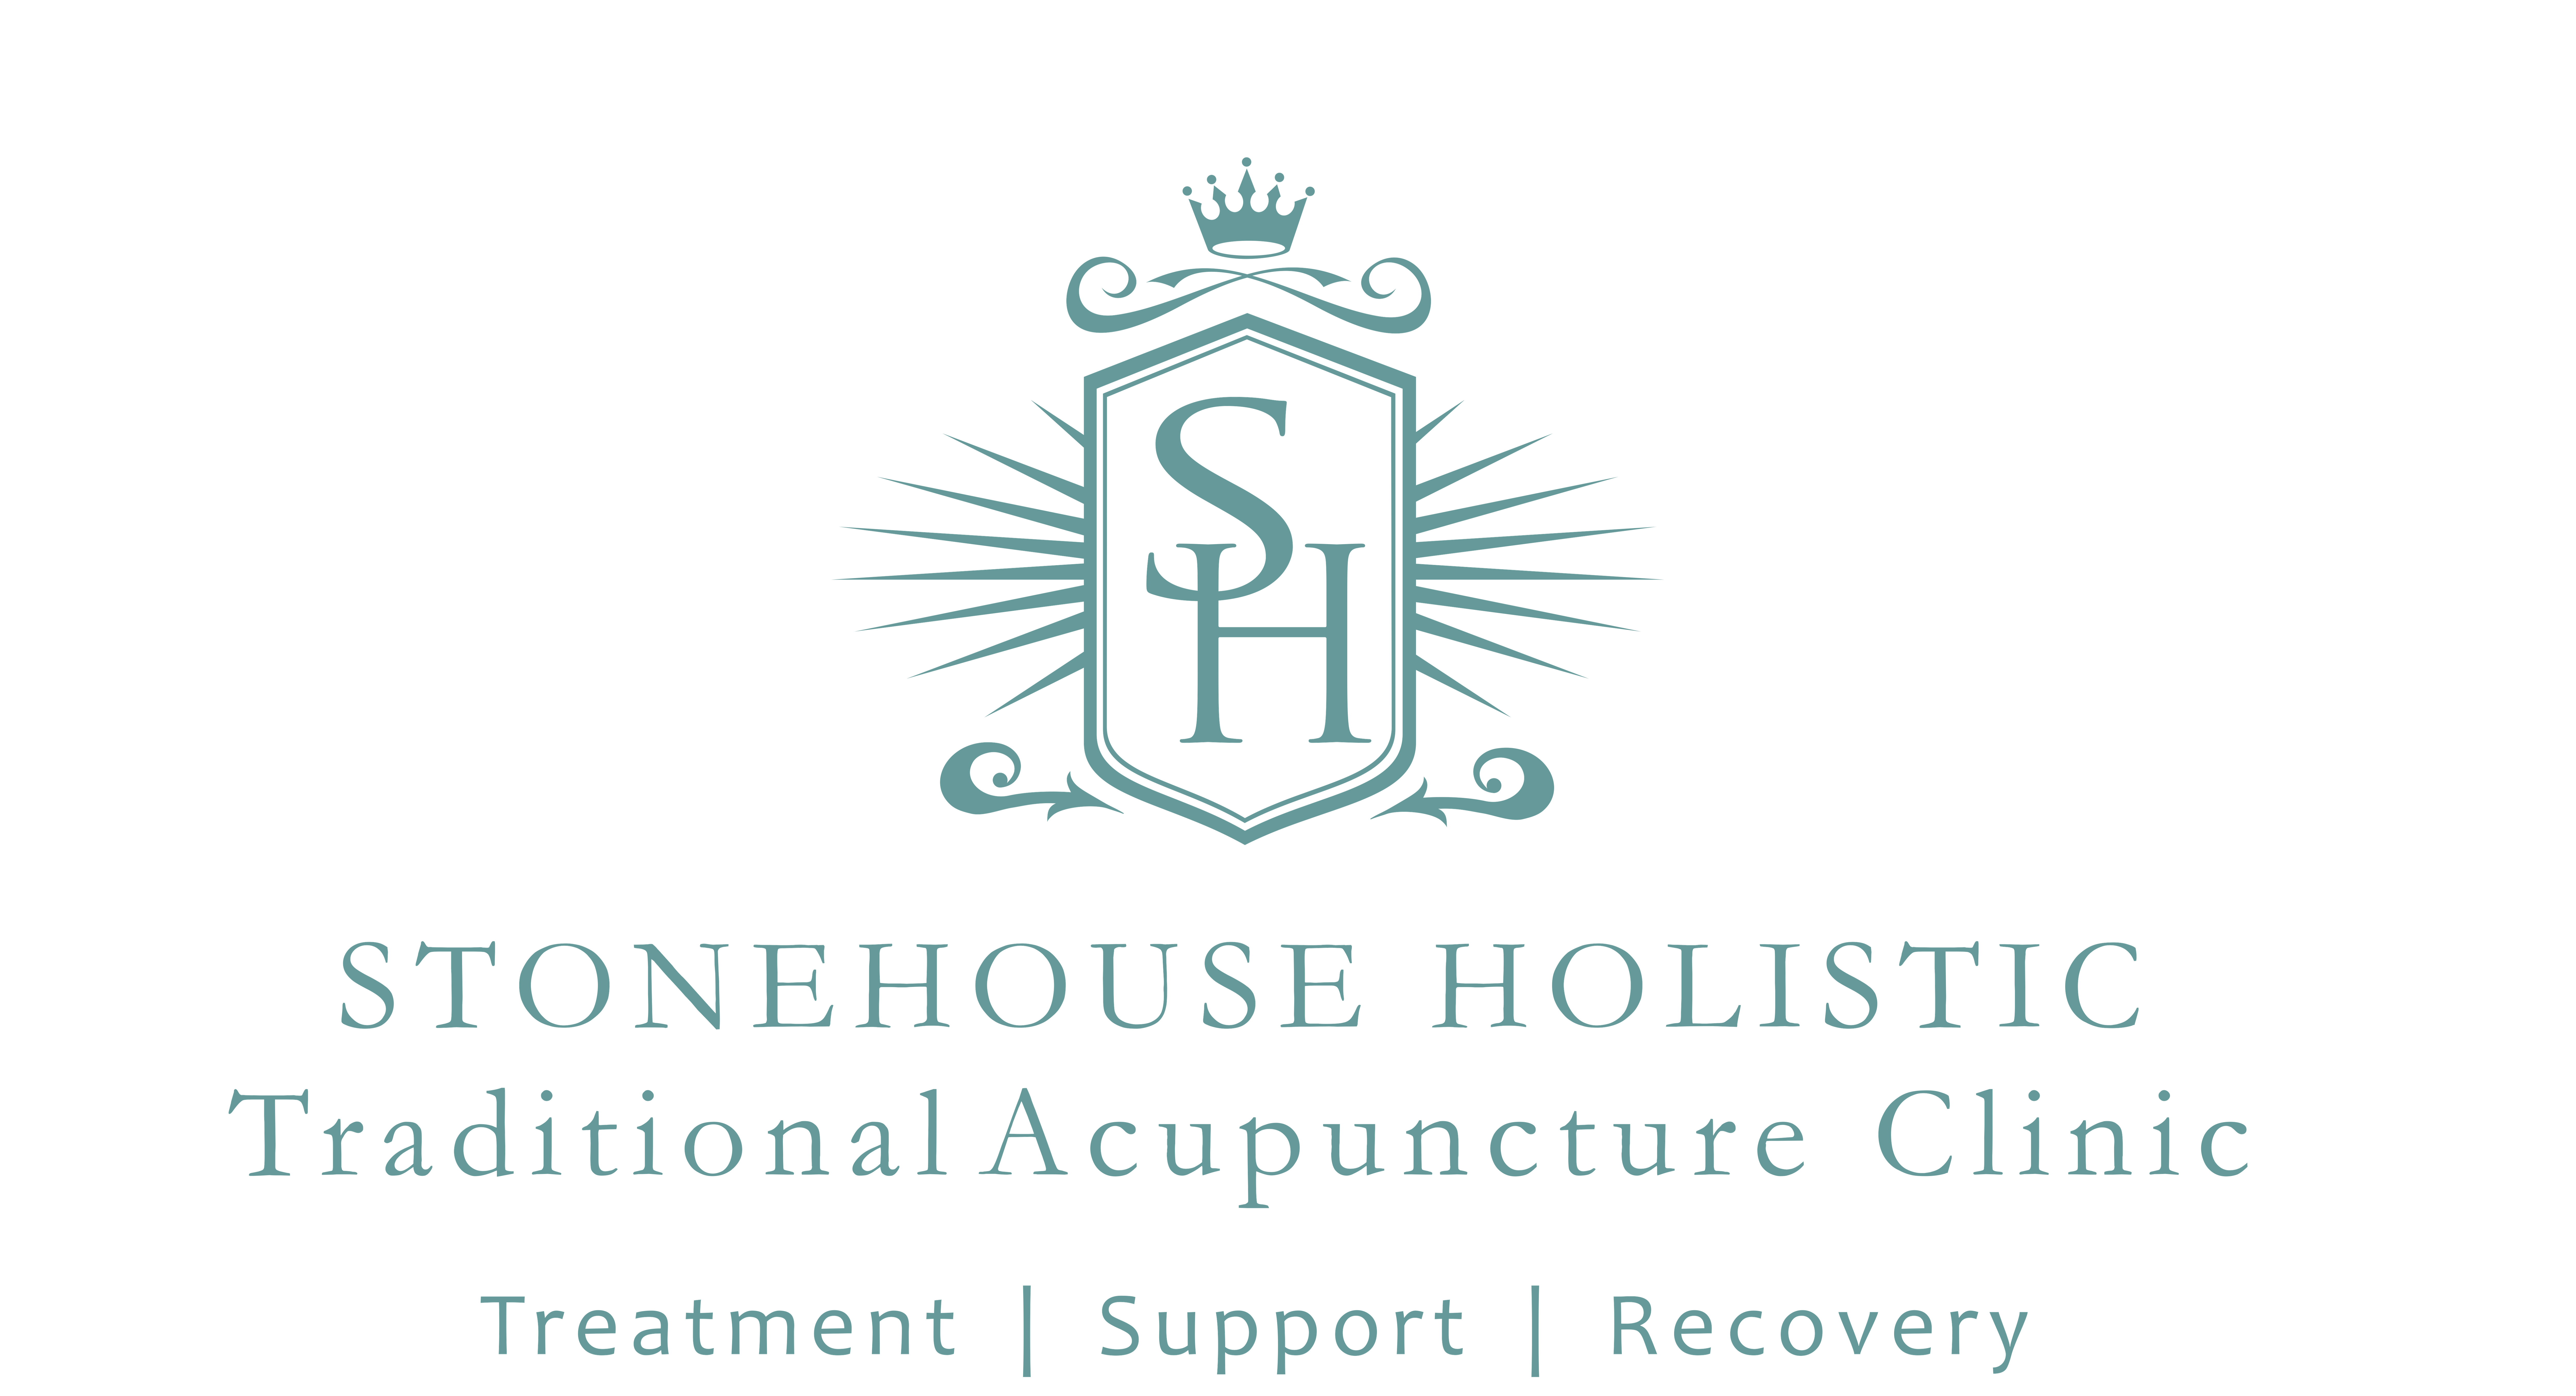 Christopher Handbury Acupuncture Clinic